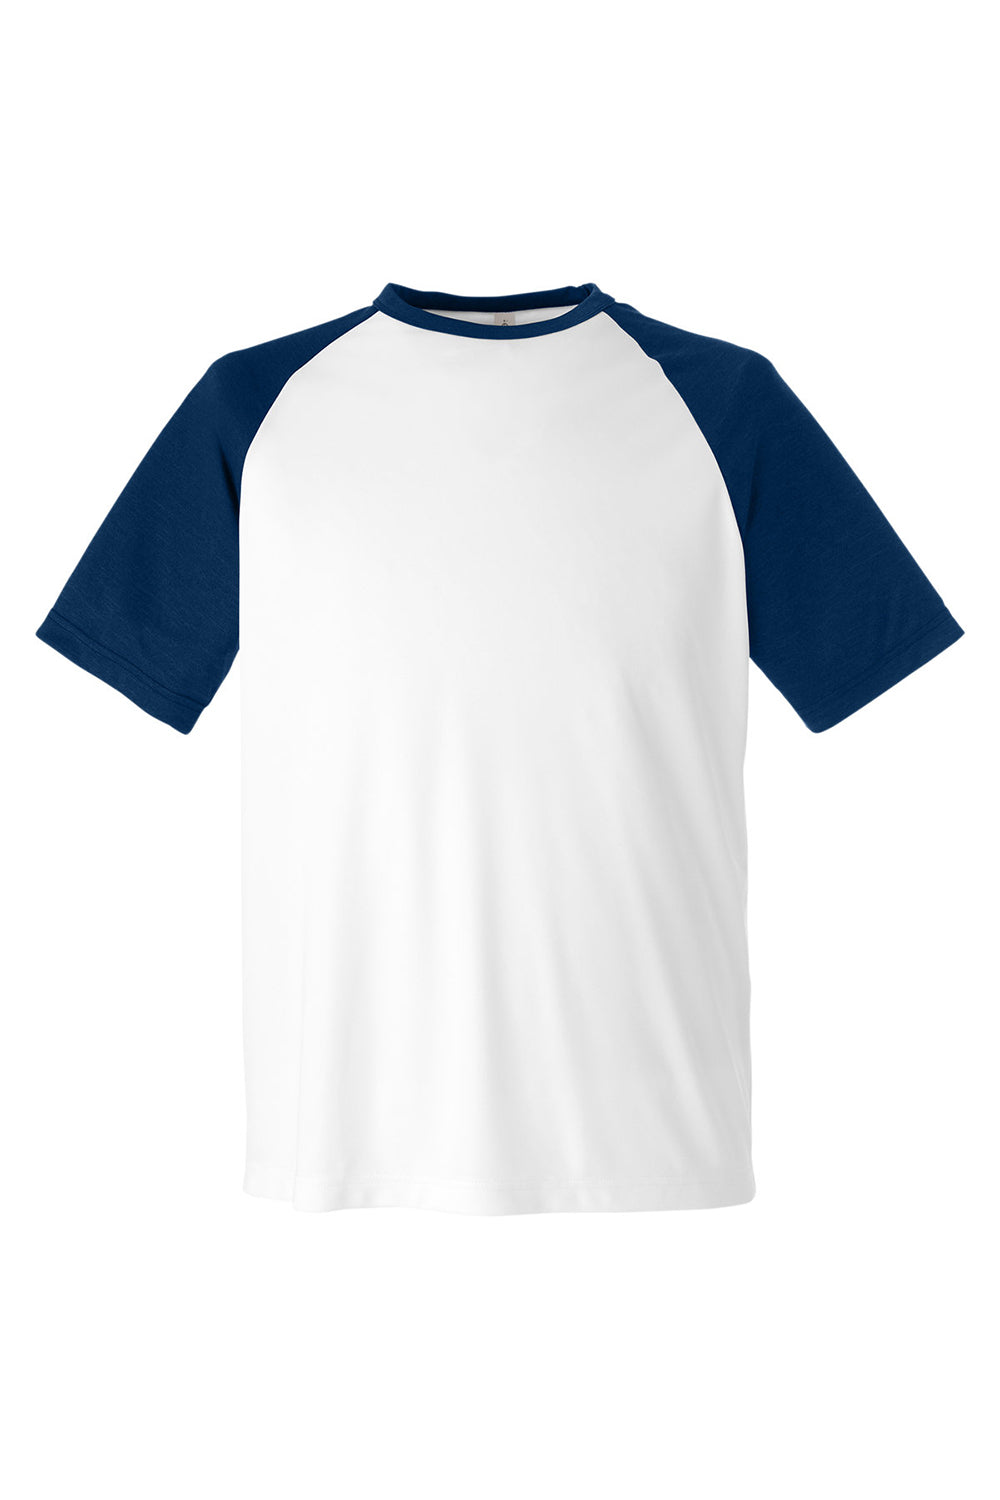 Team 365 TT62 Mens Zone Colorblock Moisture Wicking Short Sleeve Crewneck T-Shirt White/Heather Dark Navy Blue Flat Front